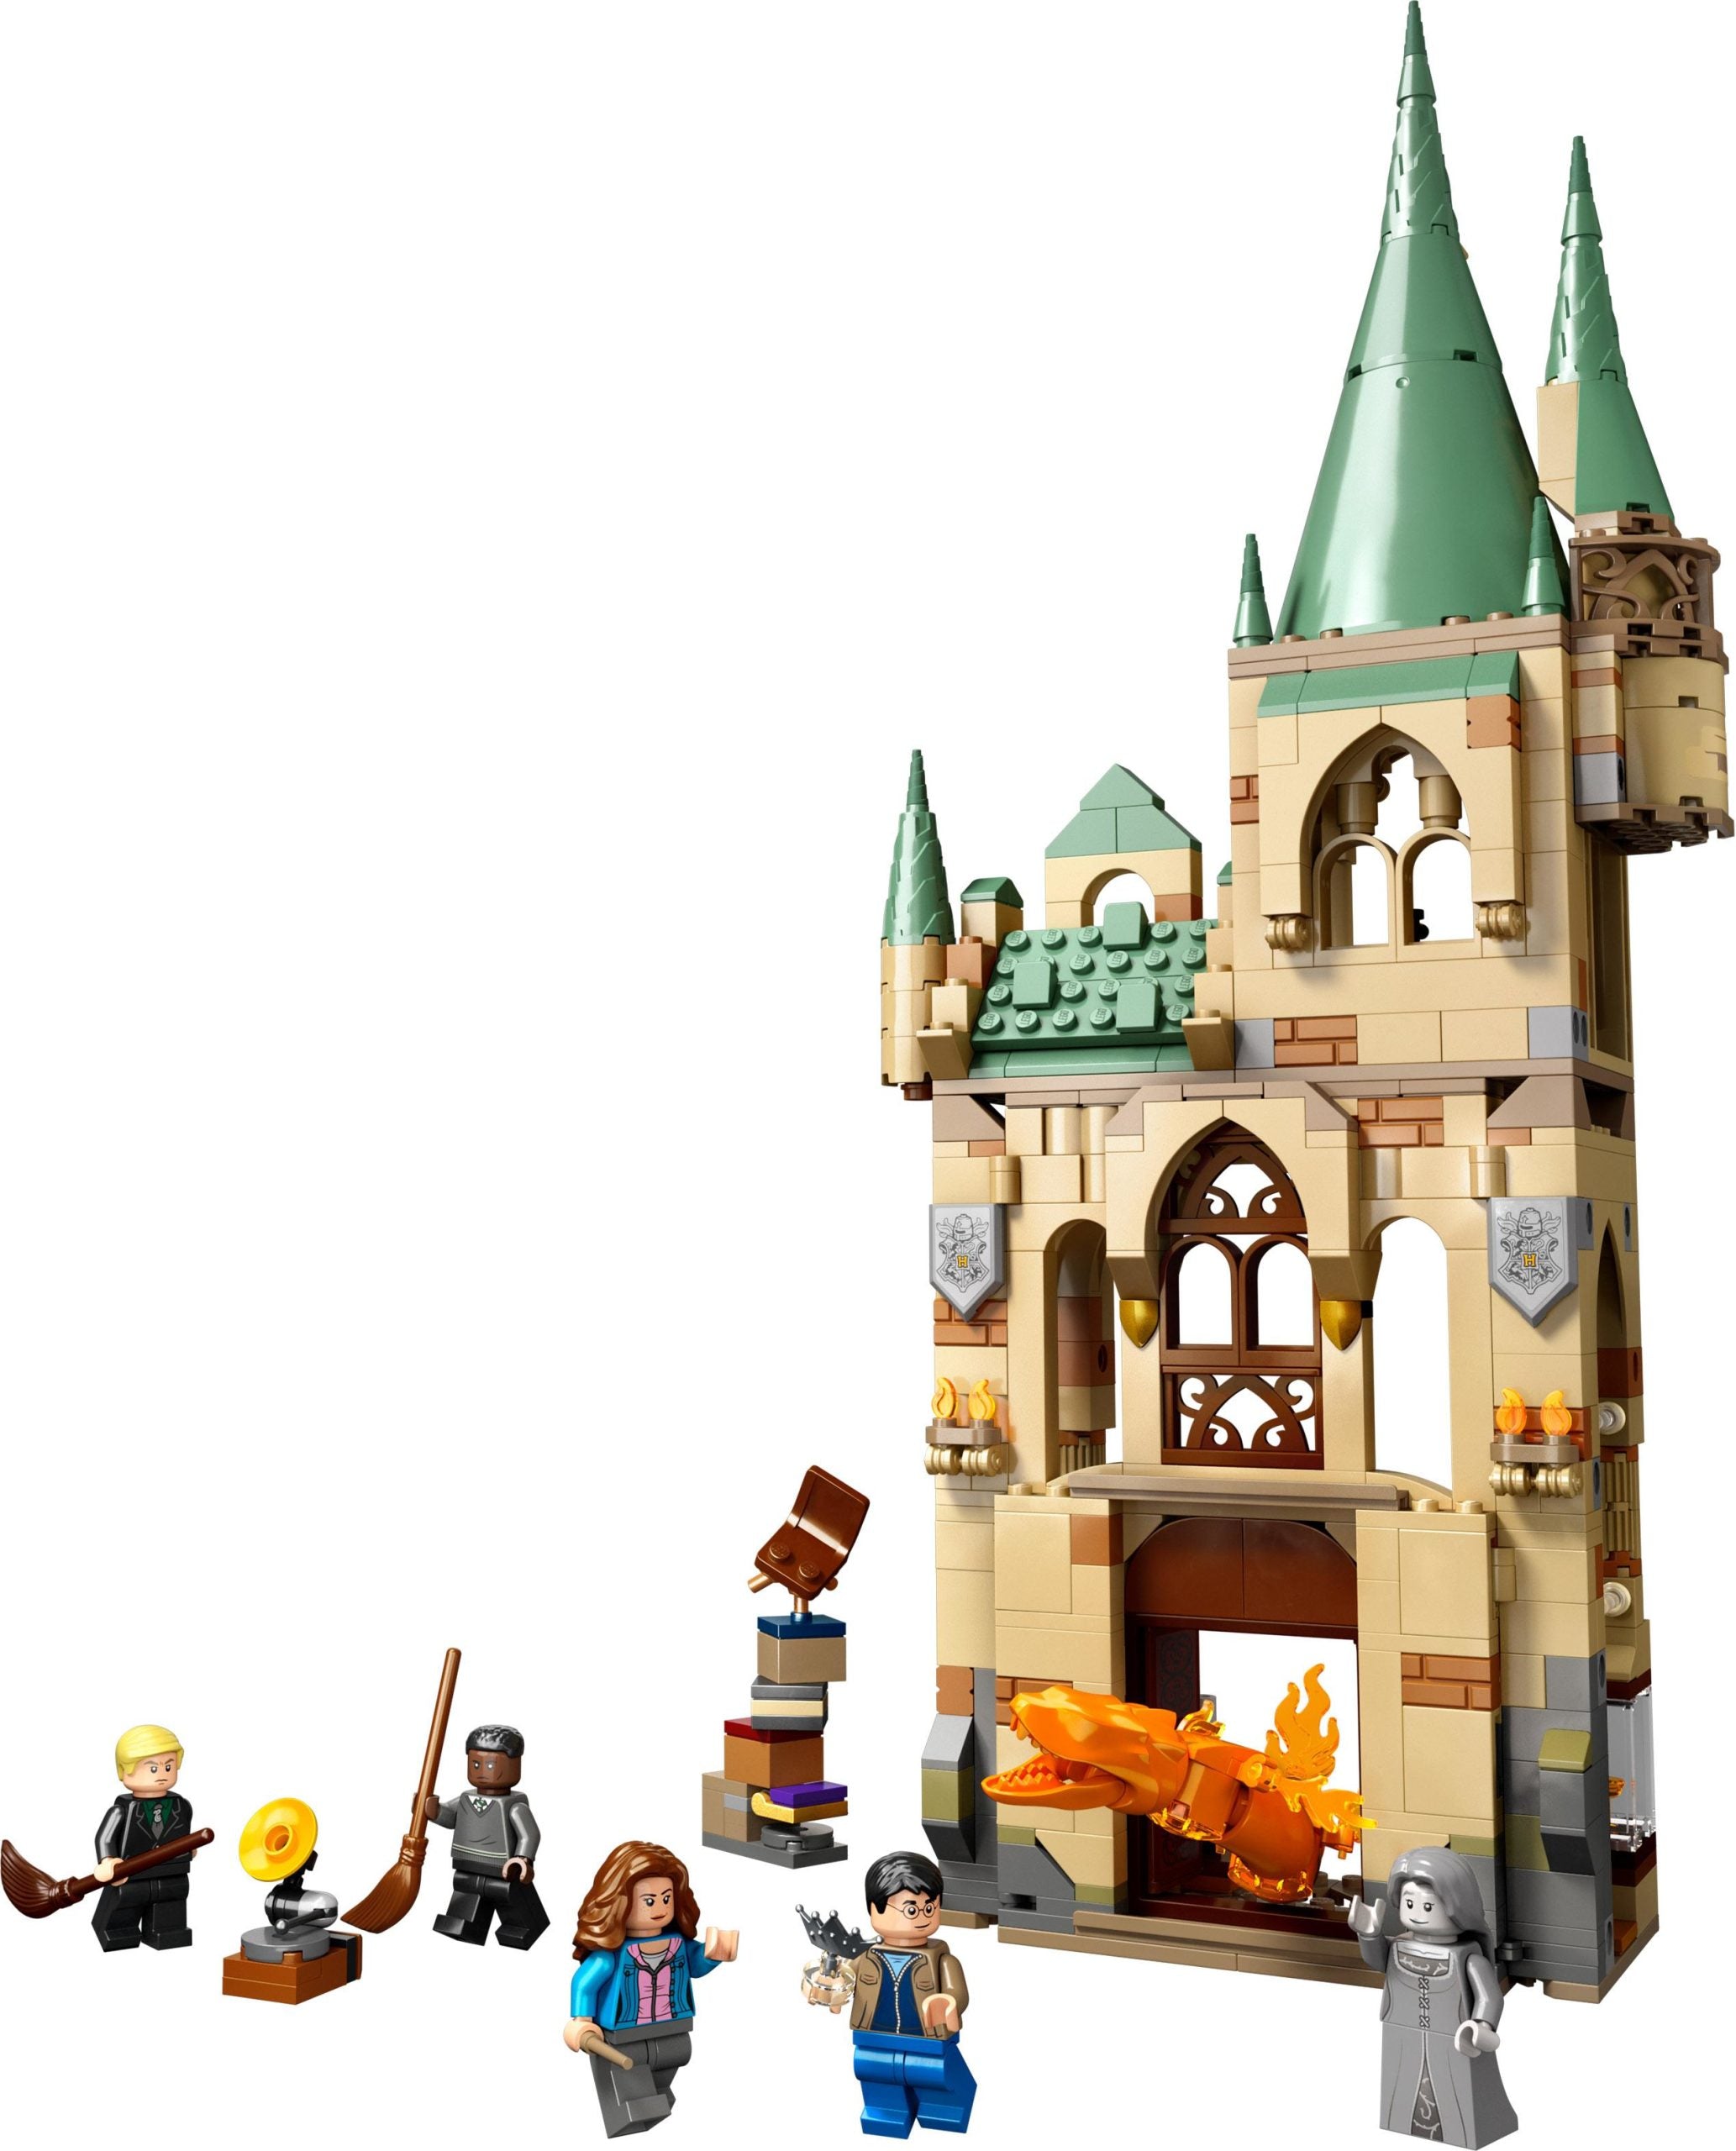 76413 - Lego - Harry Potter TM - Hogwarts: la Stanza delle Necessit?